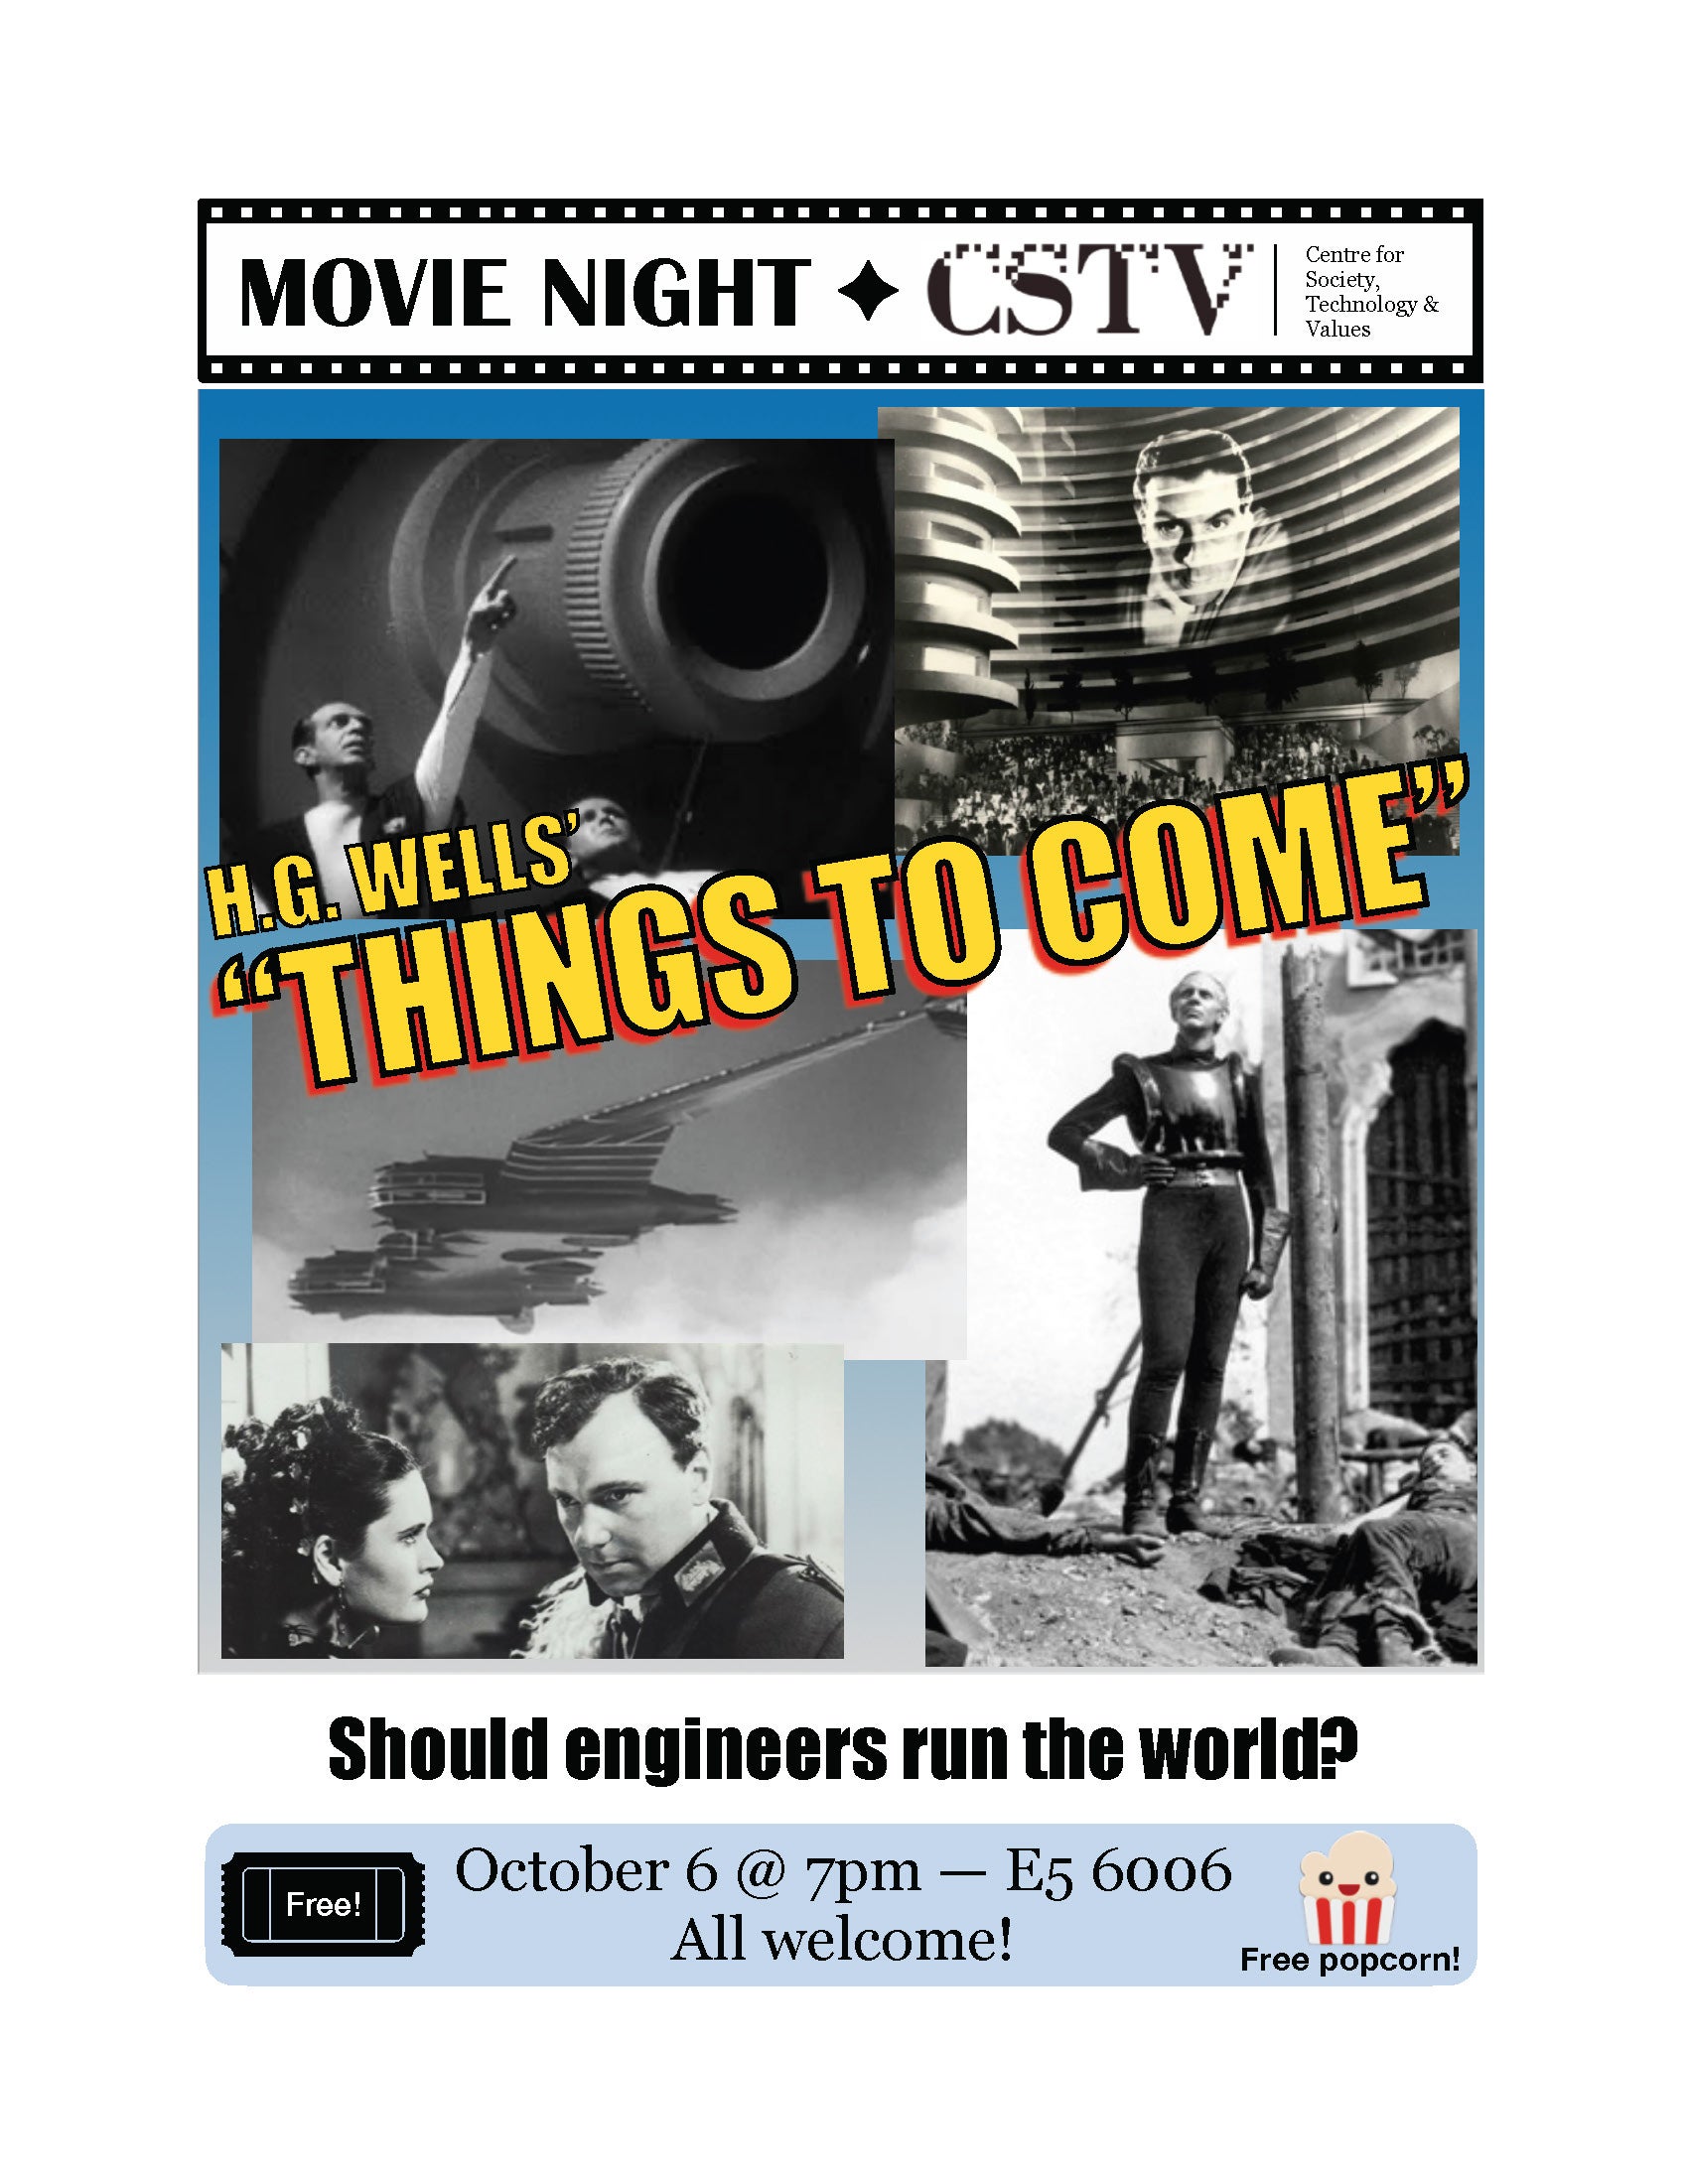 CSTV Movie Night_movie poster of Things to come